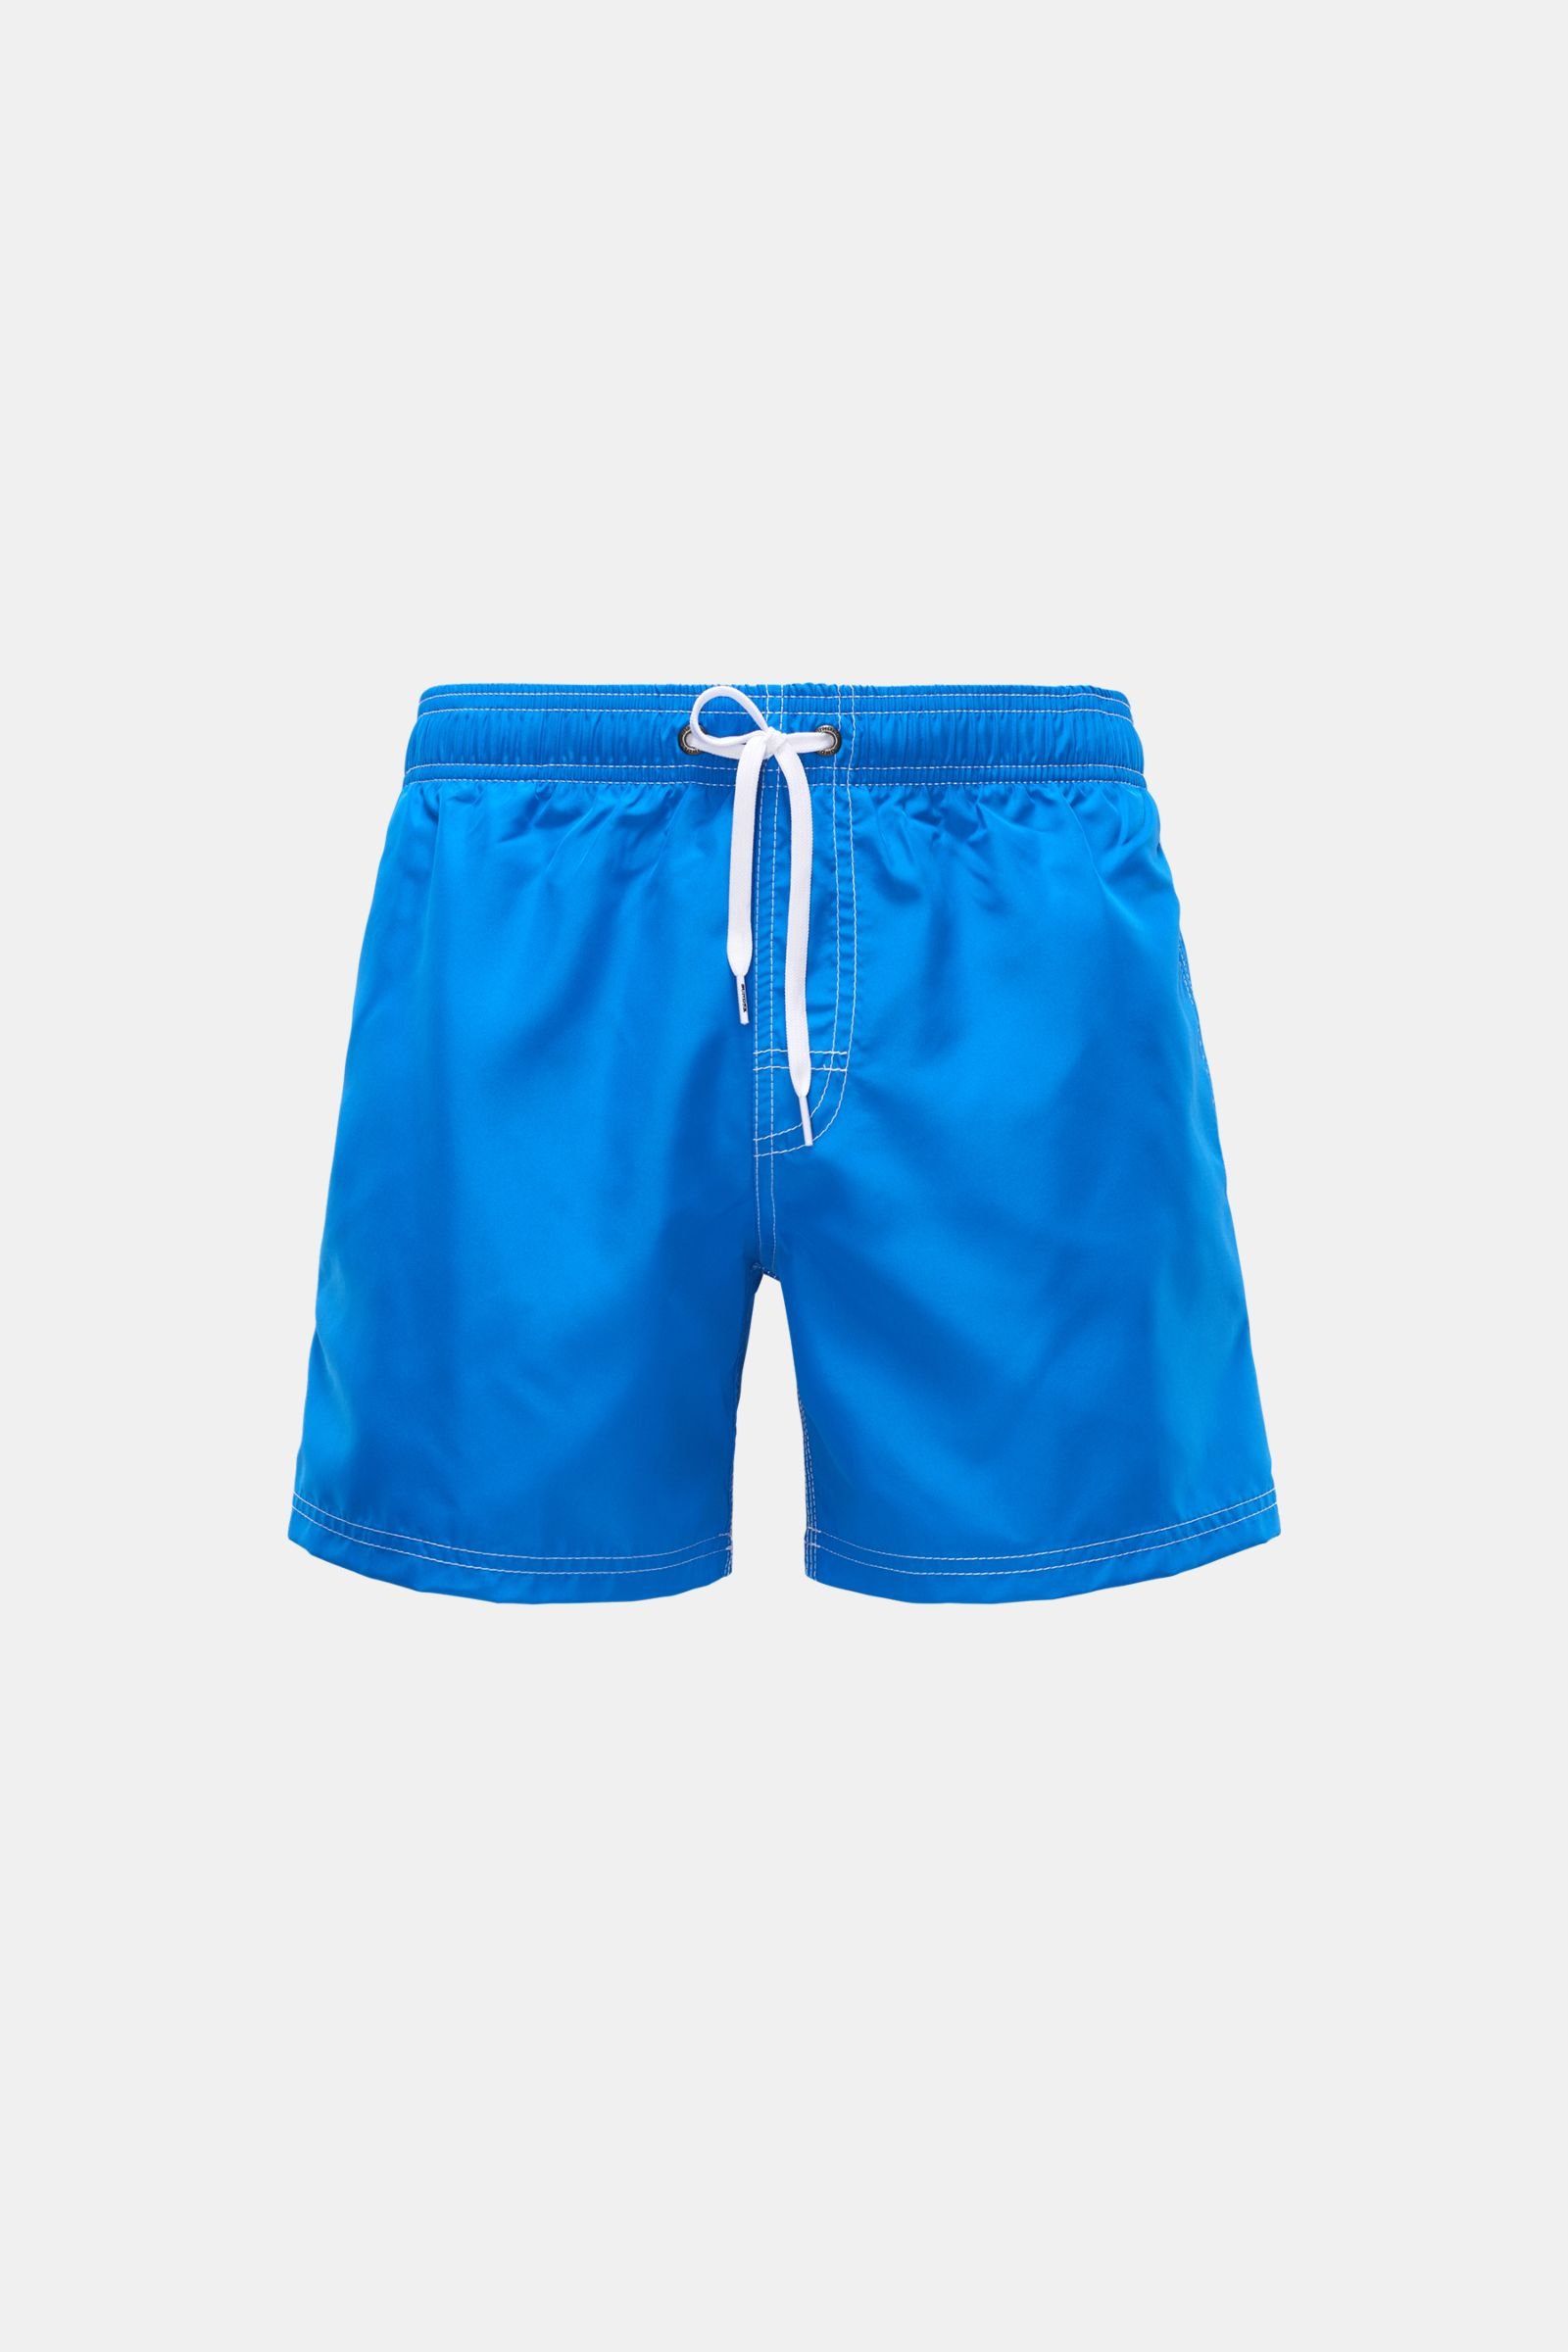 Swim shorts blue